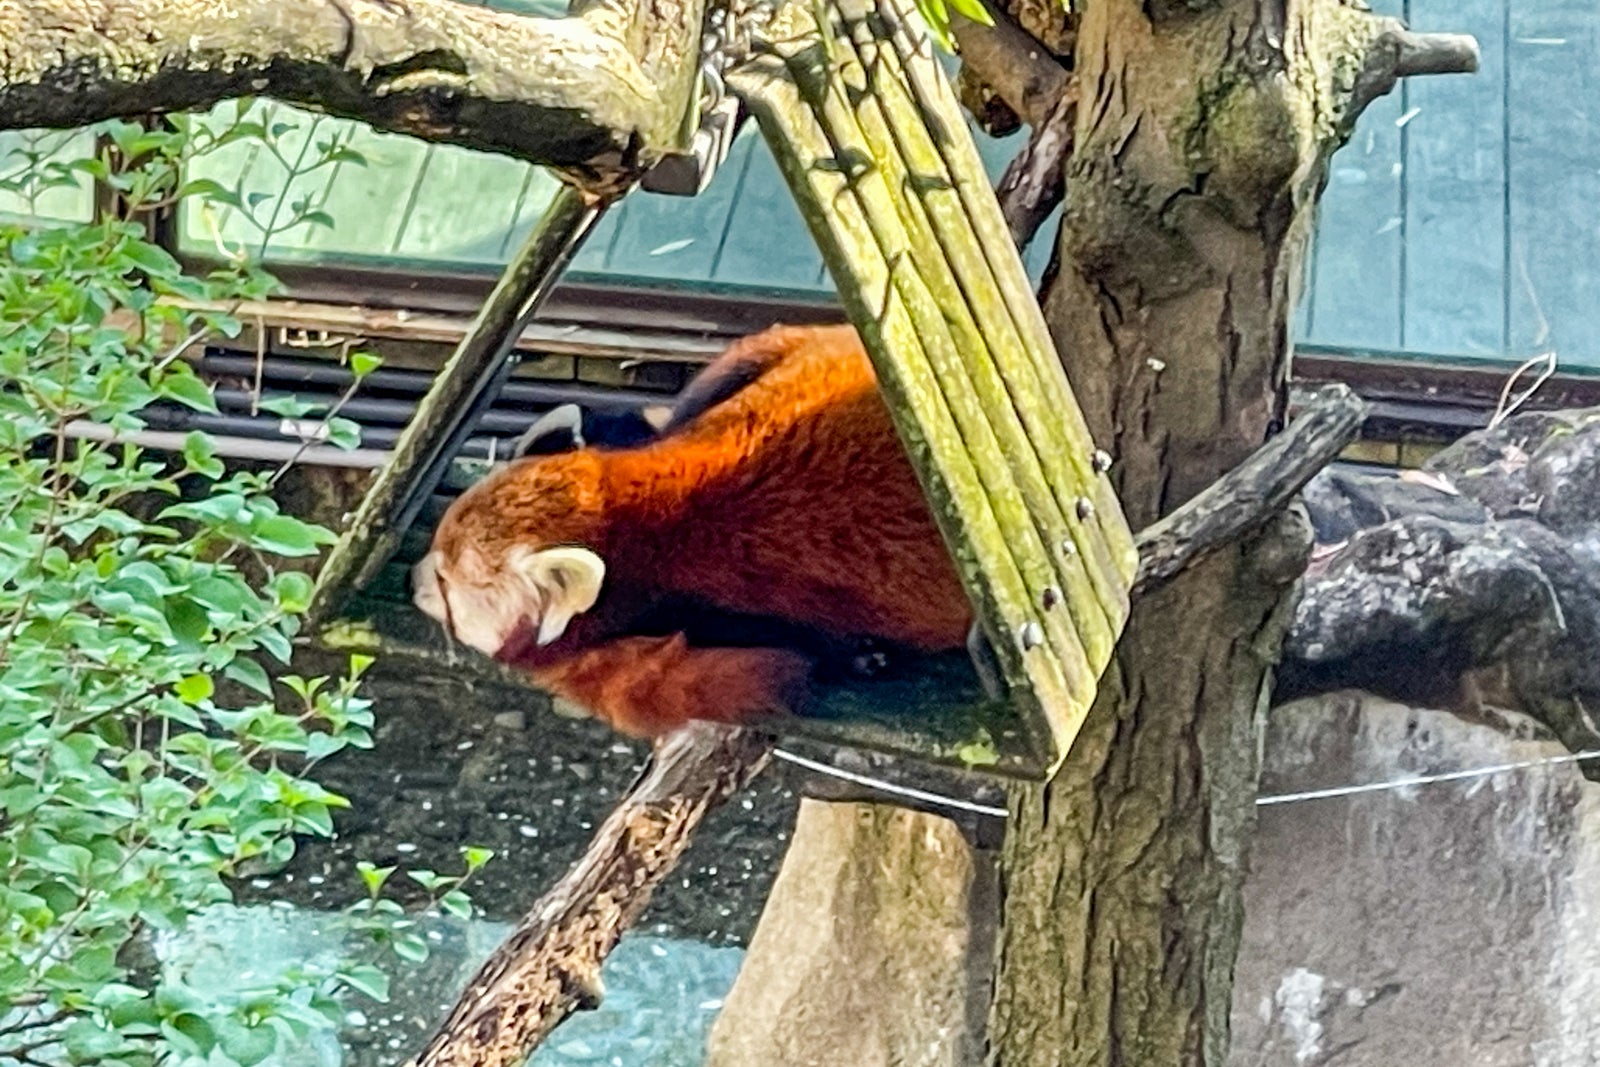 Red panda at the National Zoo